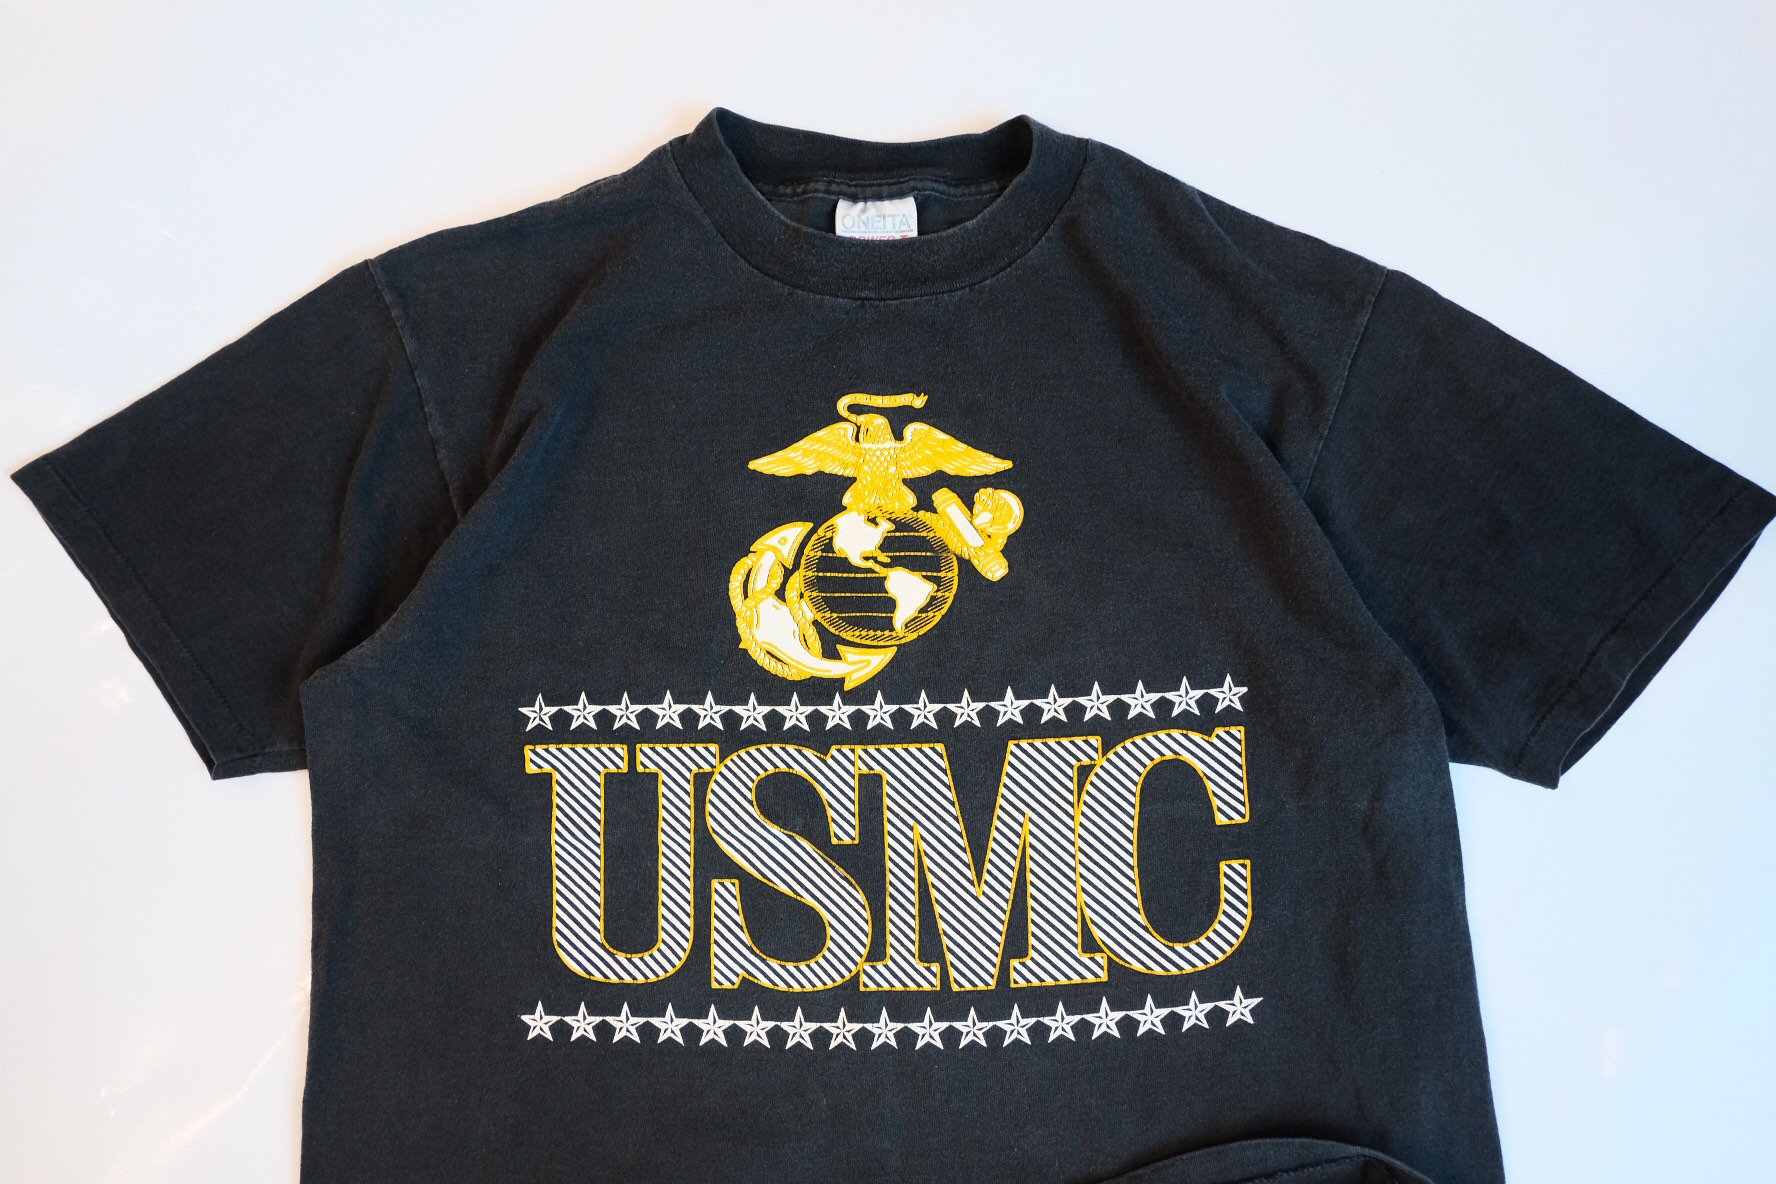 Vintage USMC T-shirt US Marine Corps Seal size L | Etsy